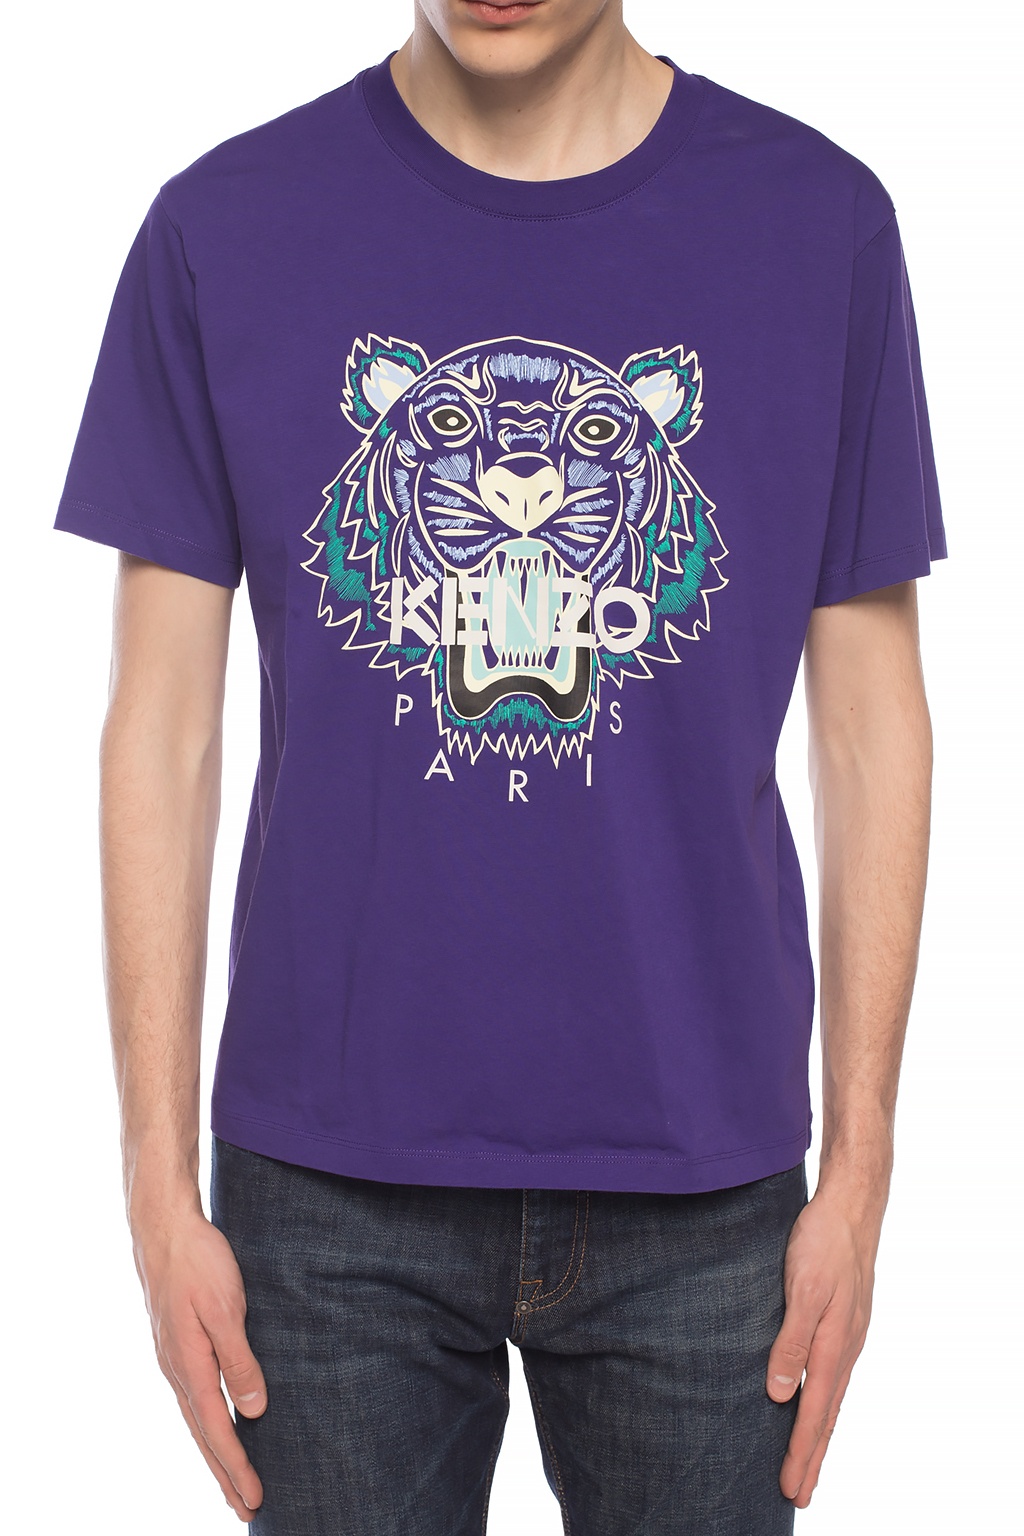 purple kenzo t shirt